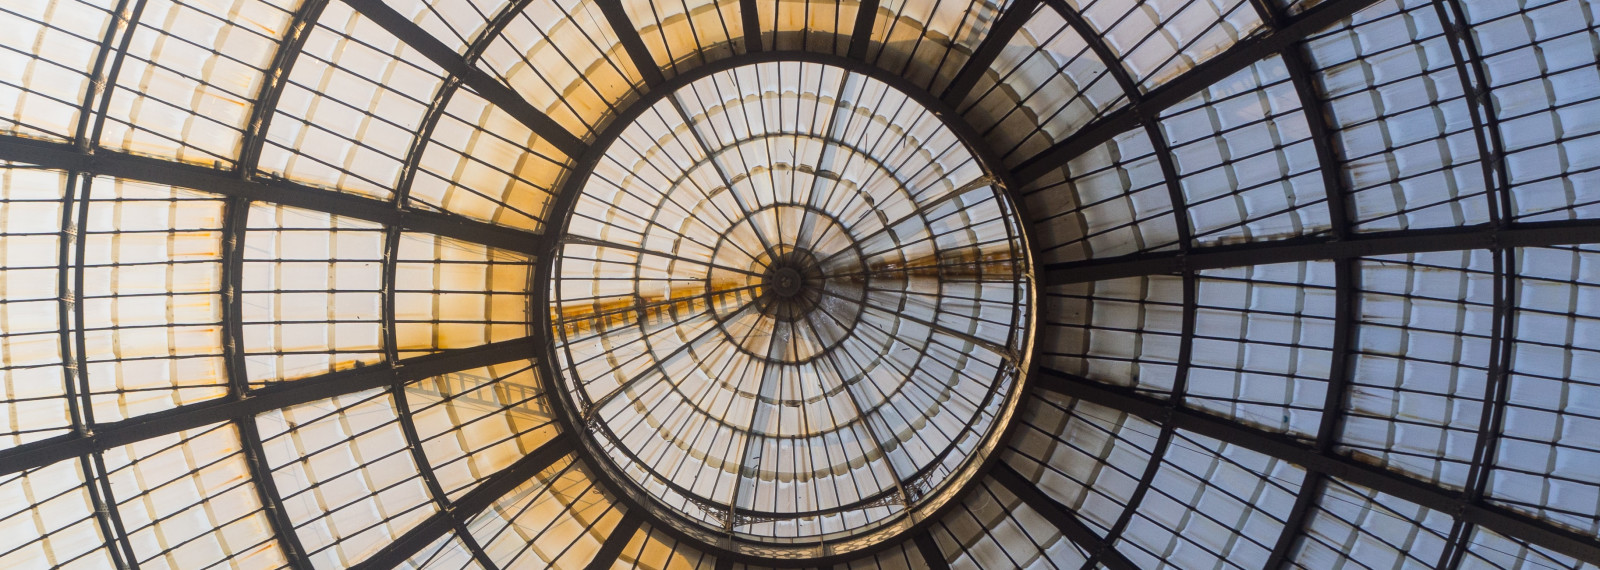 Image looking up at an ornate, circular window